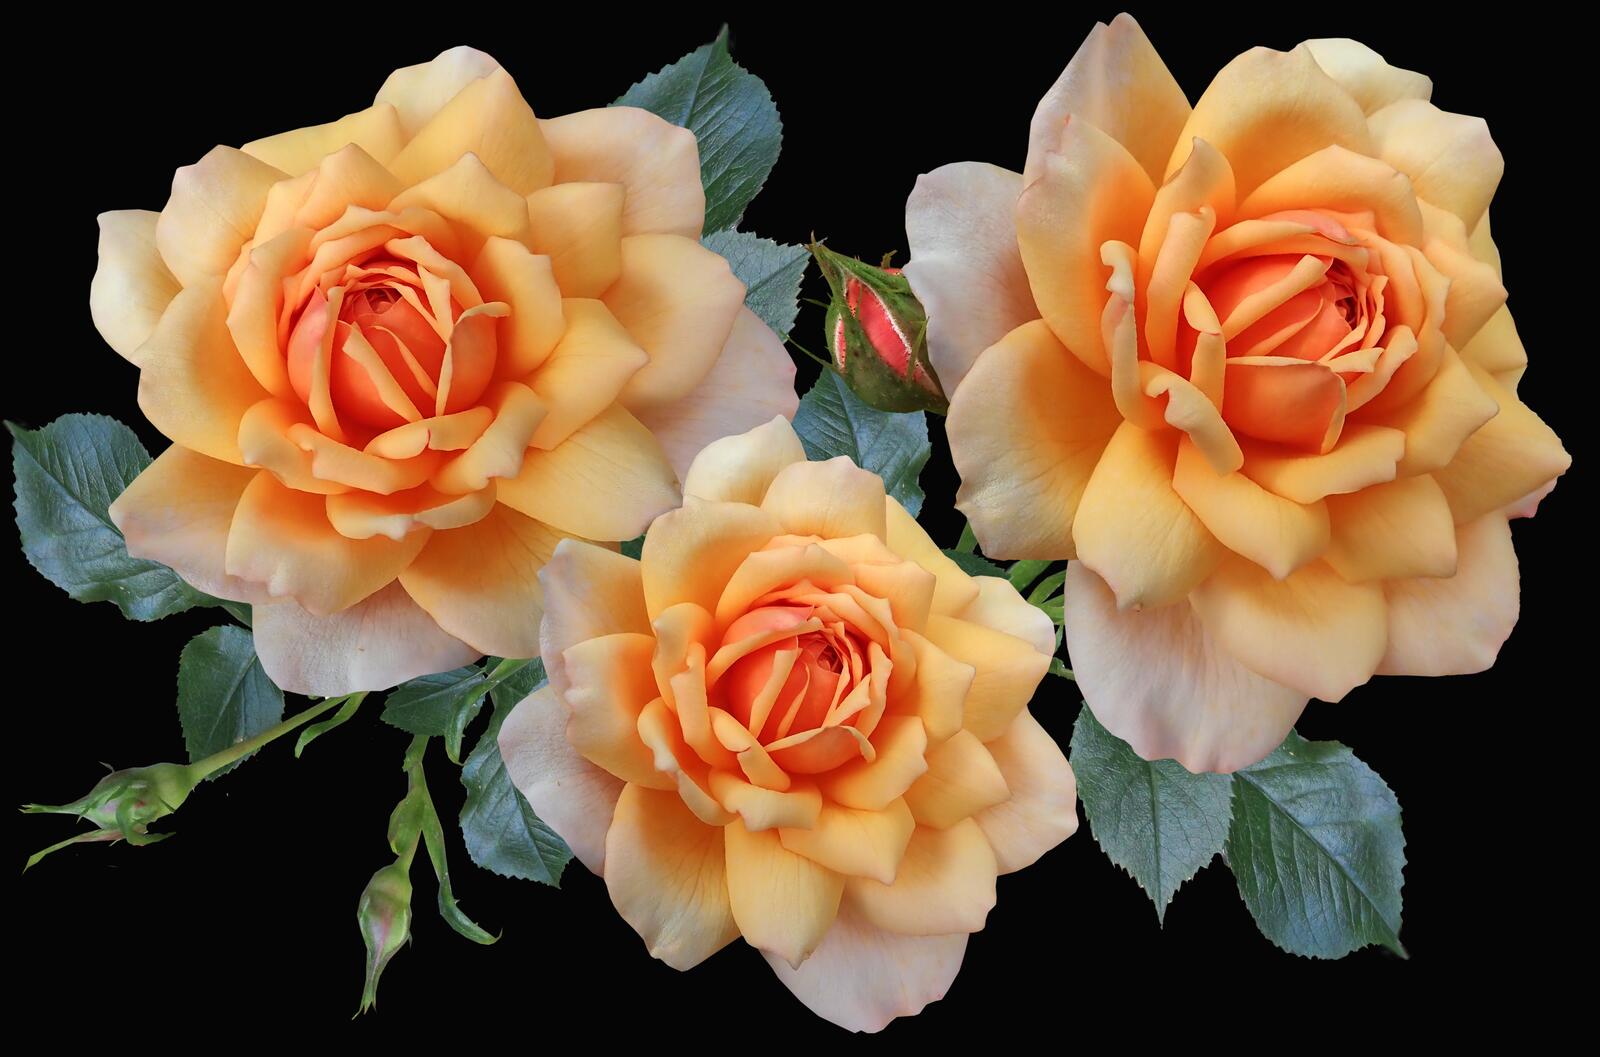 Free photo Three orange roses with white petals